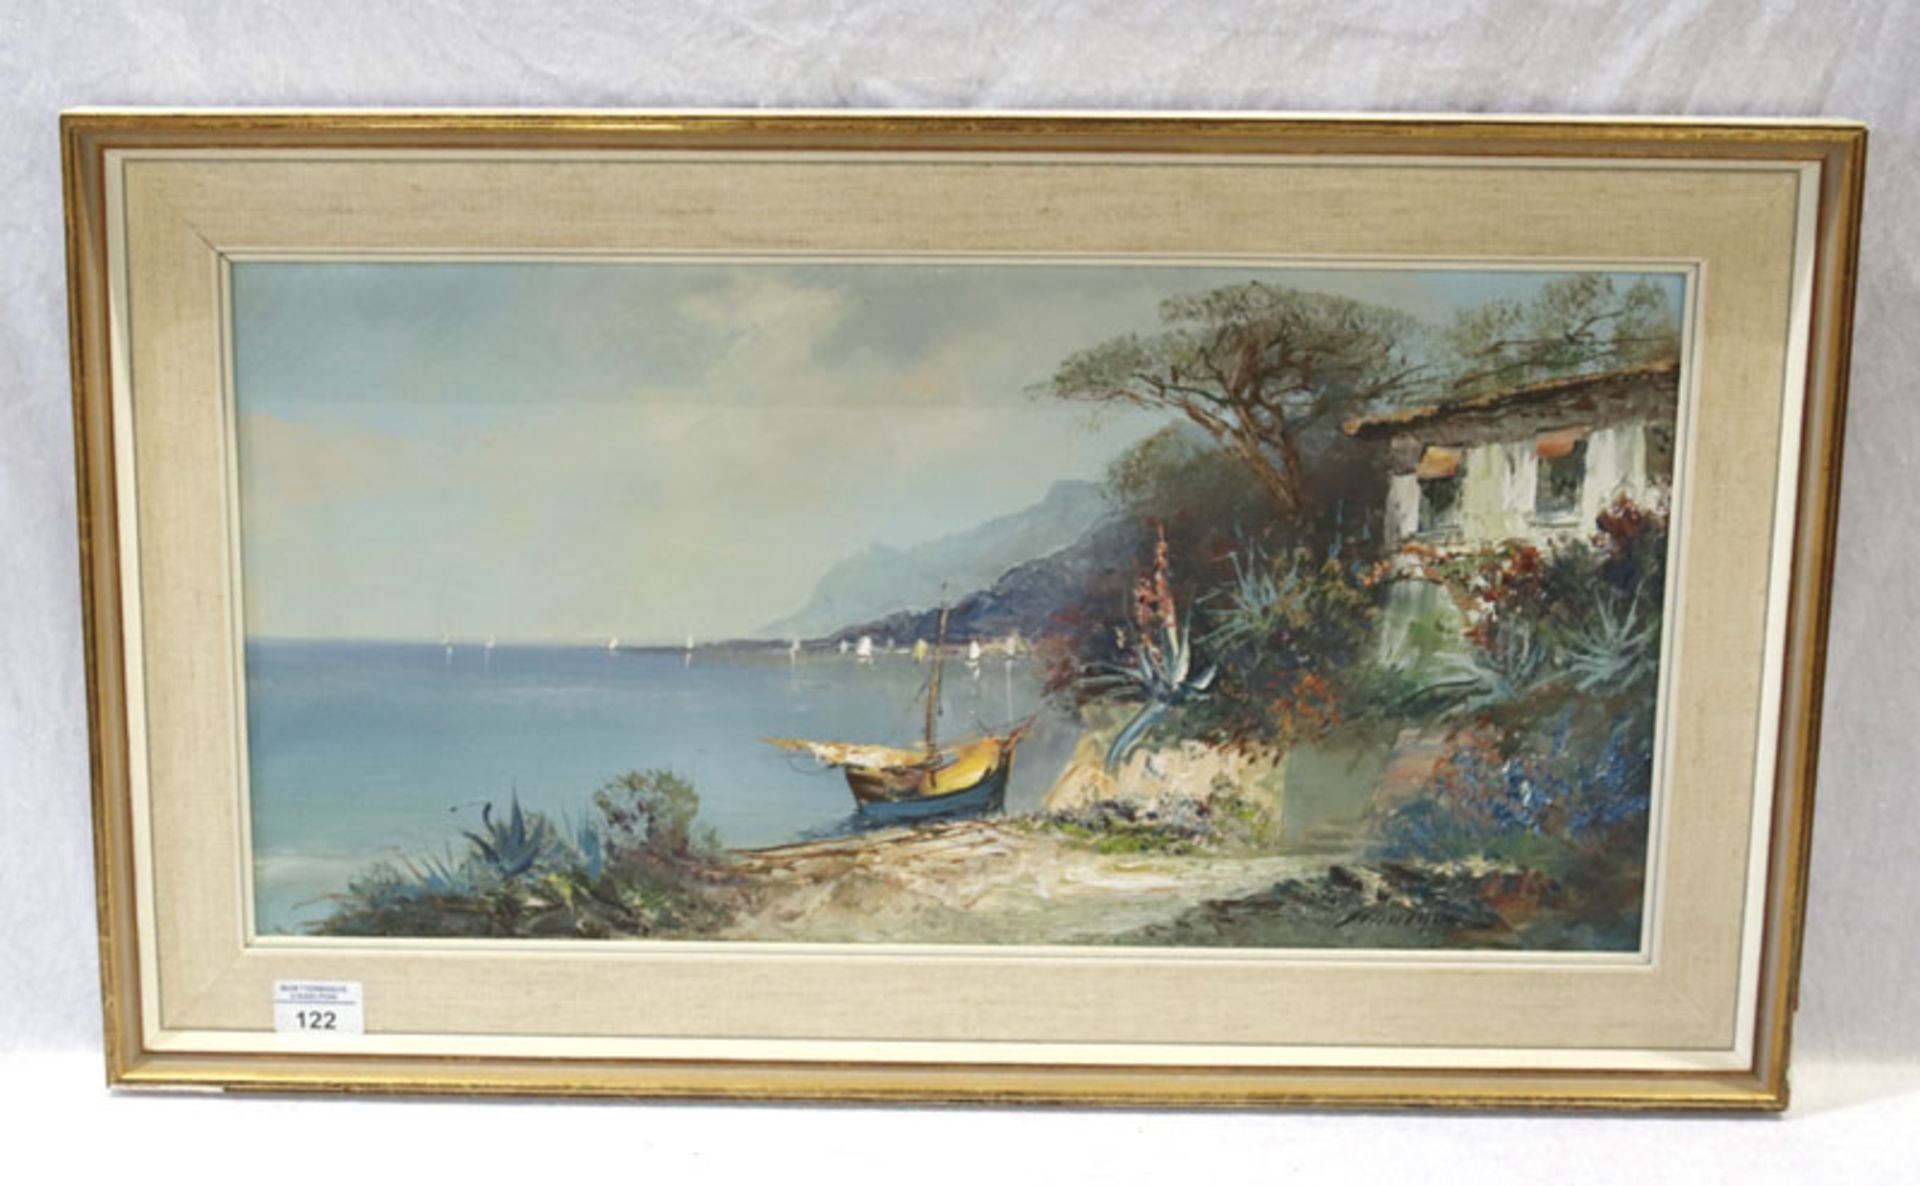 Gemälde ÖL/LW 'Italienische Seelandschaft', undeutlich signiert, gerahmt, Rahmen beschädigt, incl.